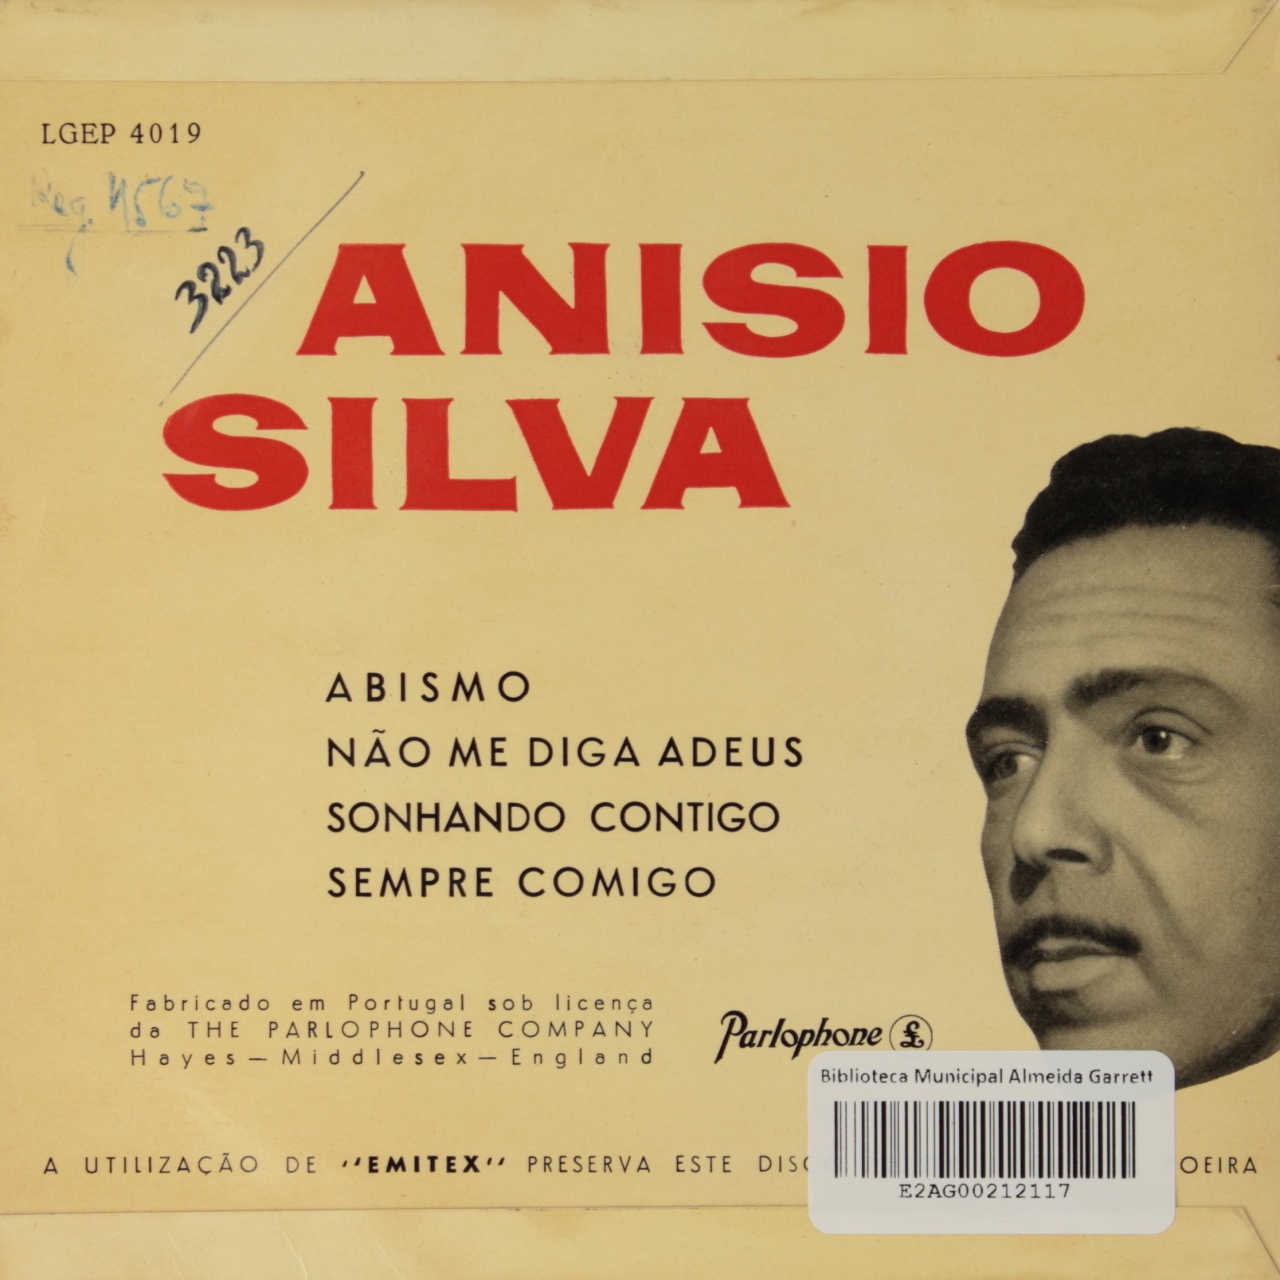 Anisio Silva